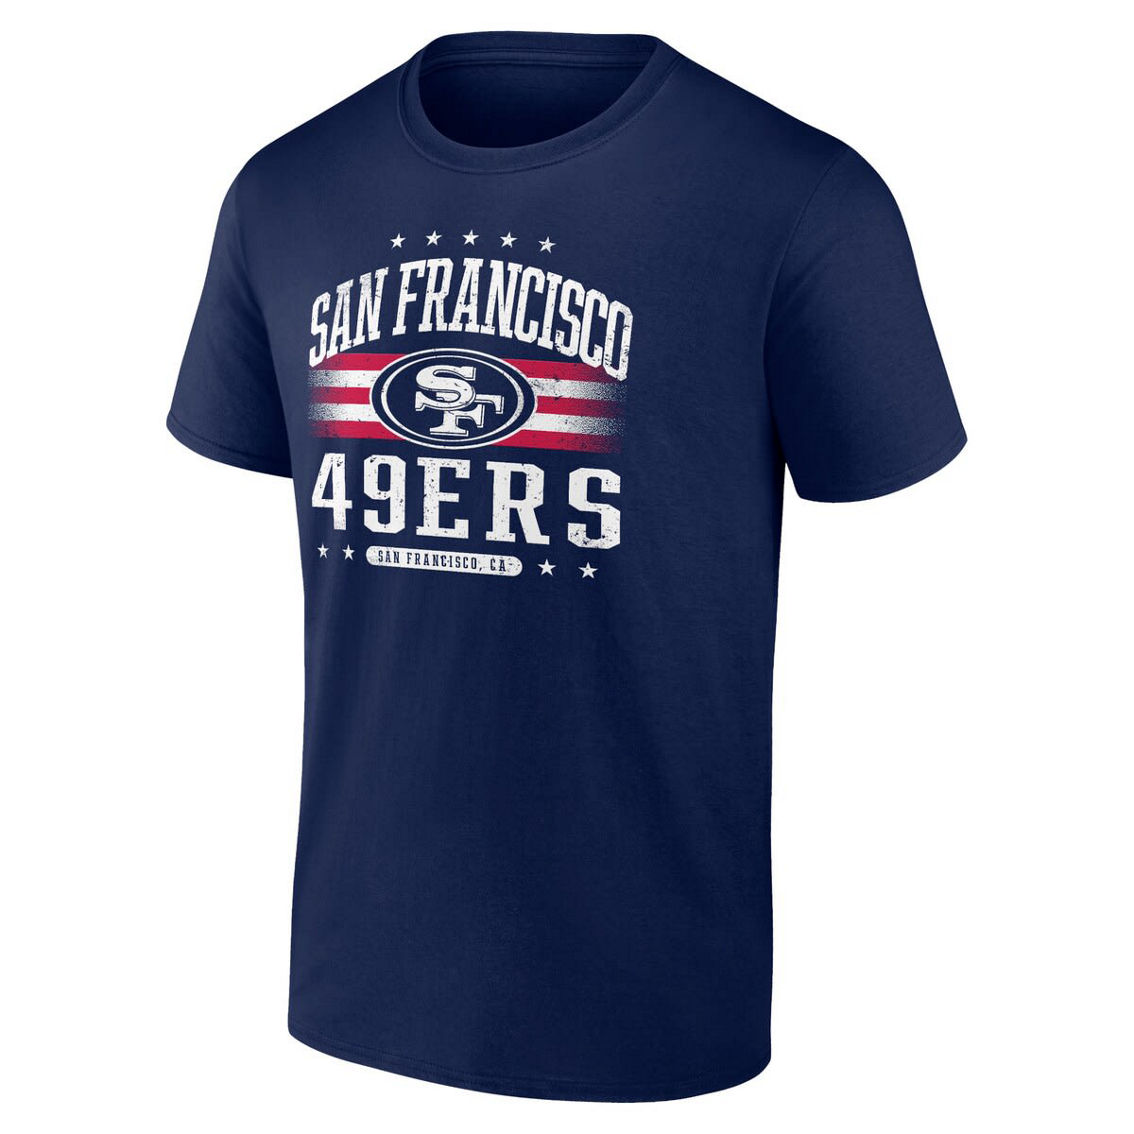 Fanatics Branded Men's Navy San Francisco 49ers Americana T-Shirt - Image 3 of 4